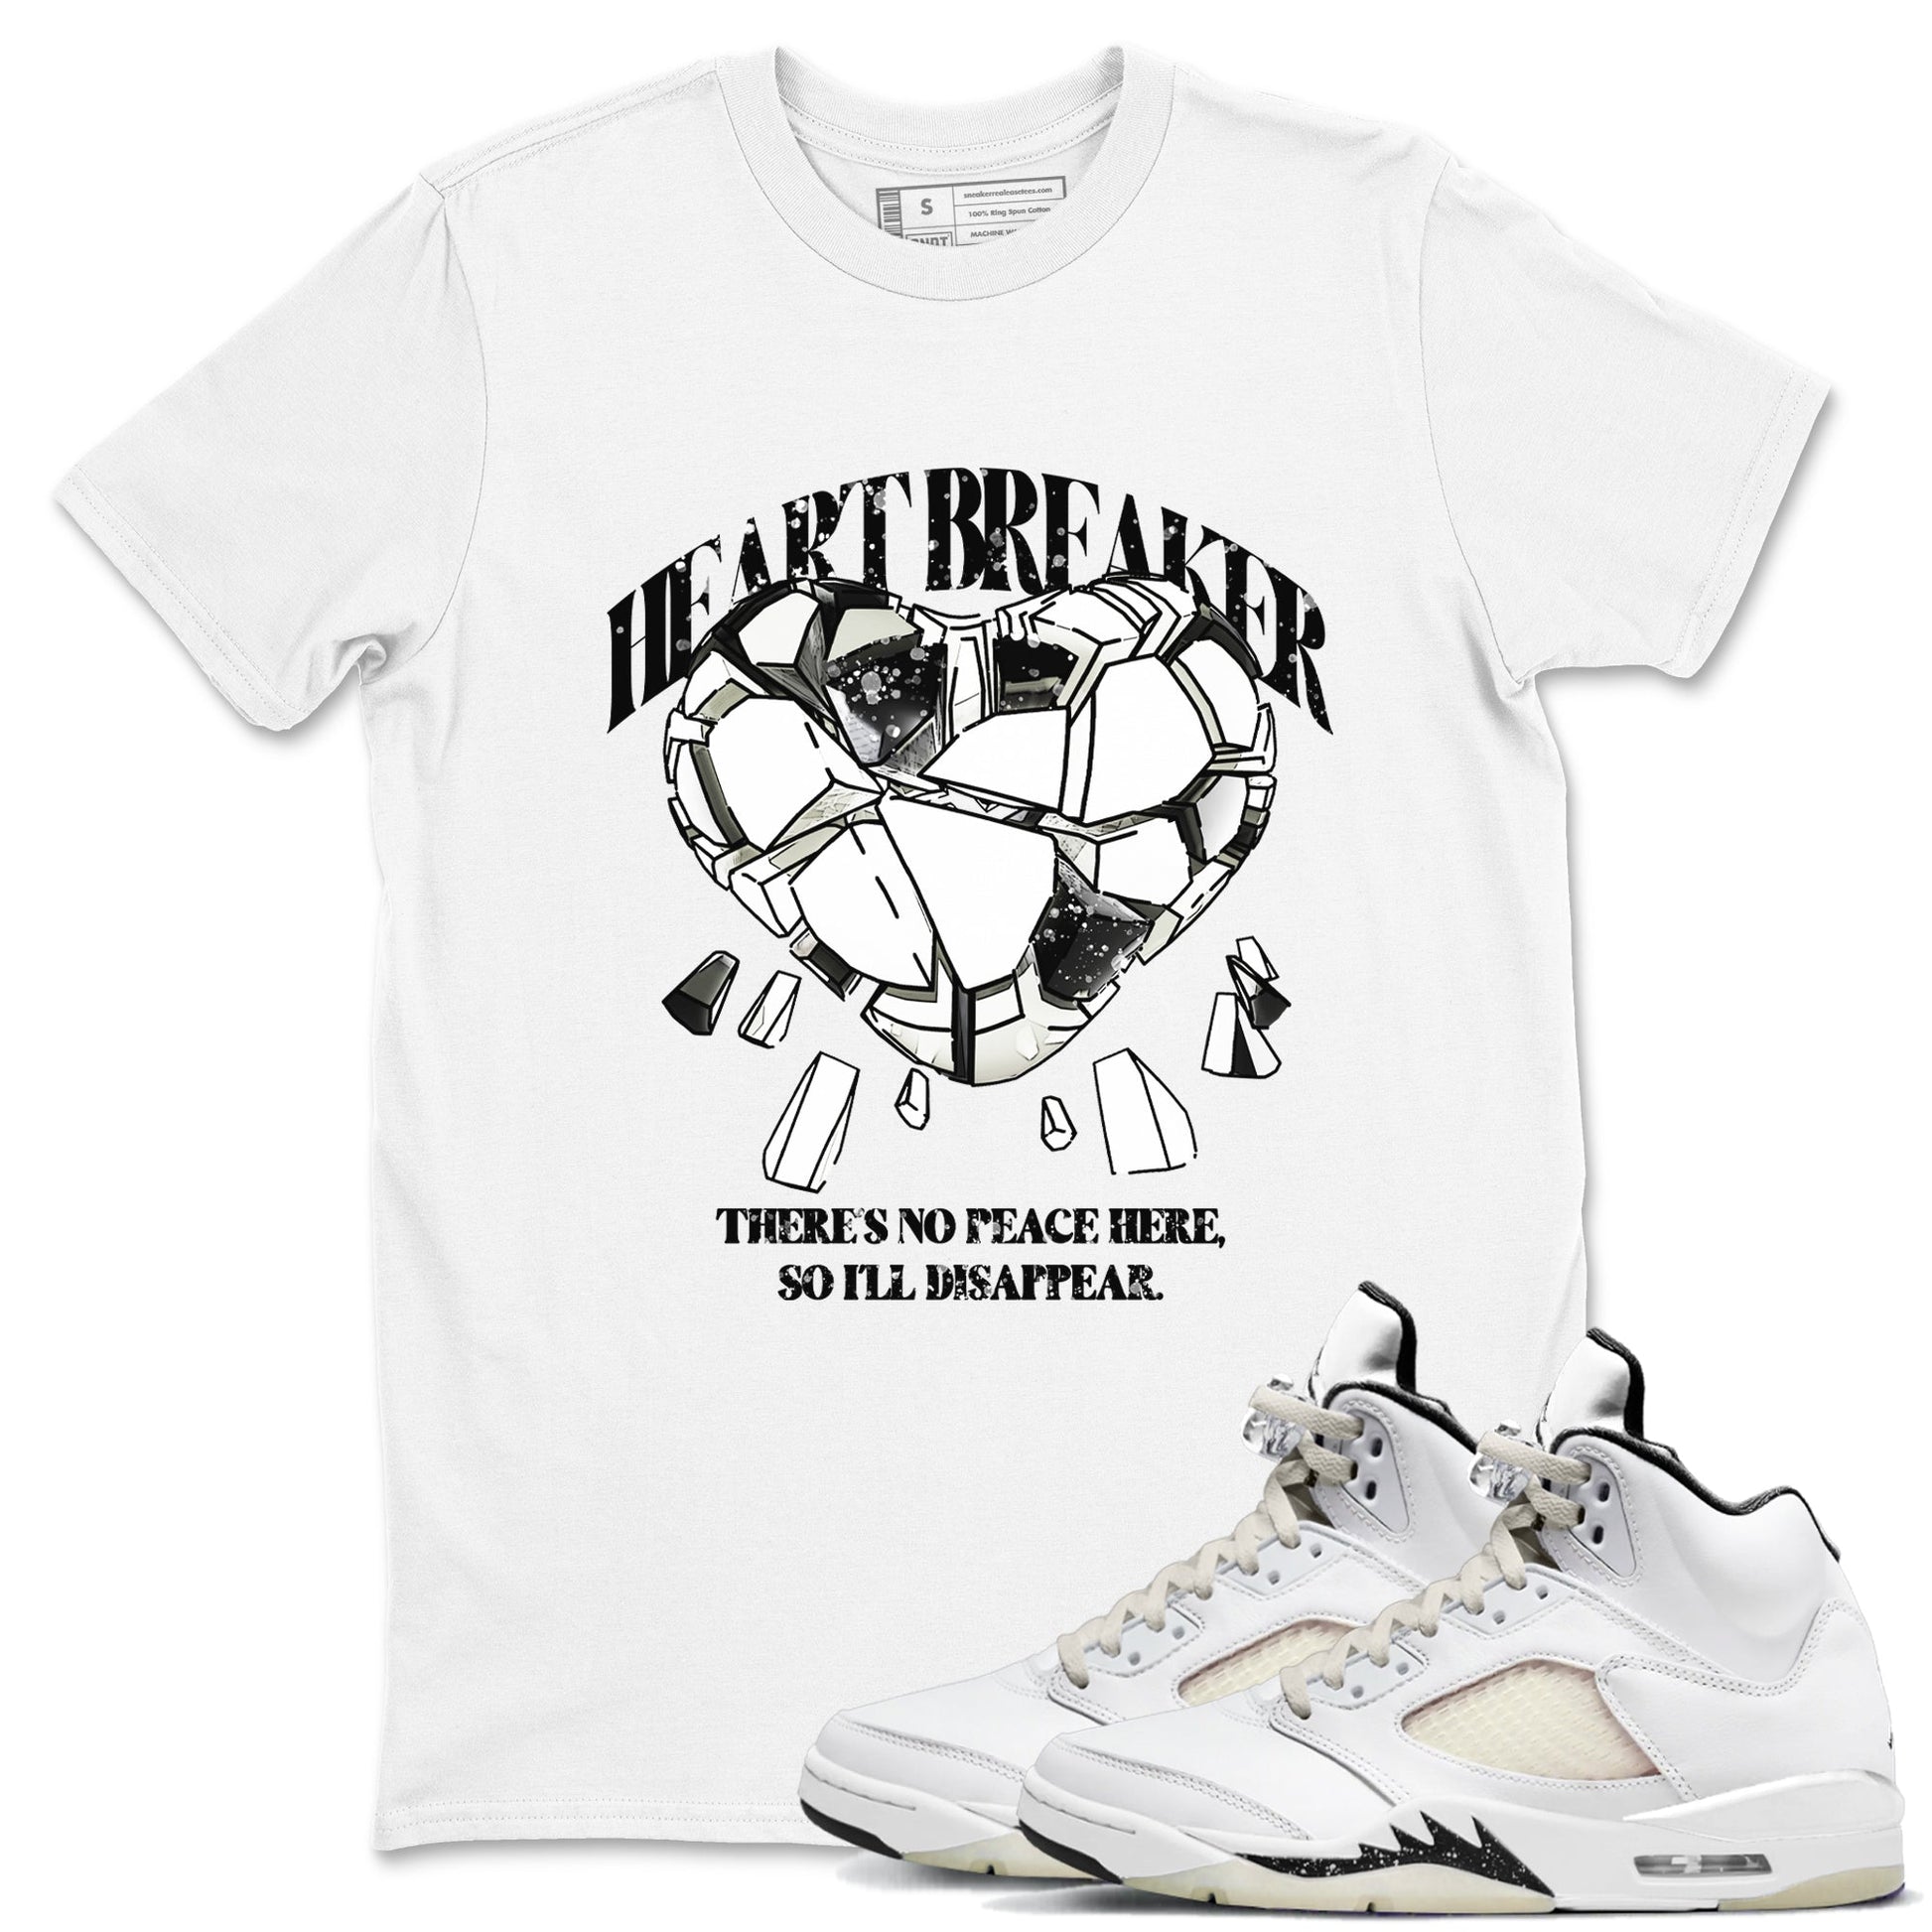 5s Sail shirt to match jordans Heart Breaker sneaker tees Air Jordan 5 Sail SNRT Sneaker Release Tees unisex cotton White 1 crew neck shirt